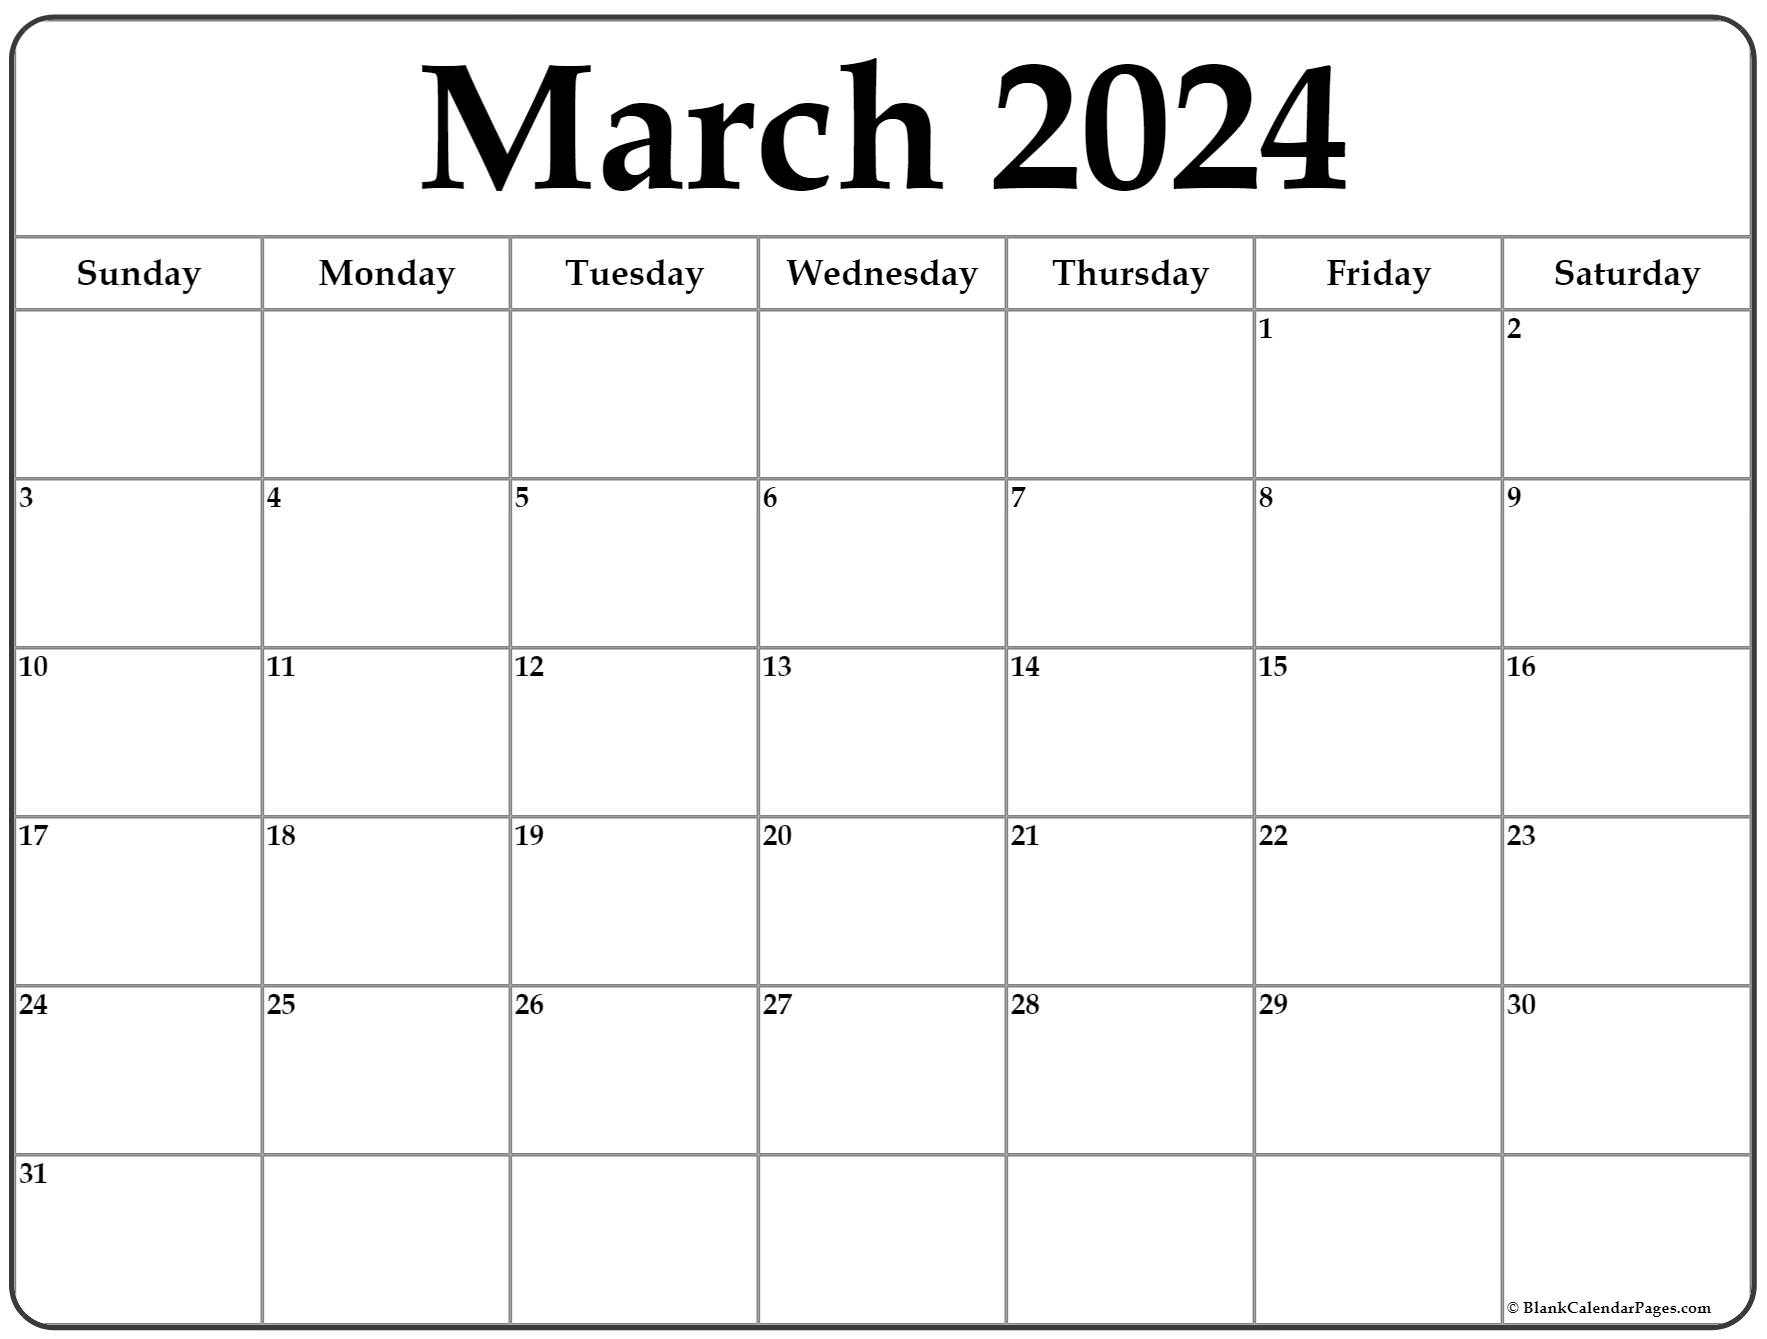 March 2022 Monthly Calendar March 2022 Calendar | Free Printable Calendar Templates